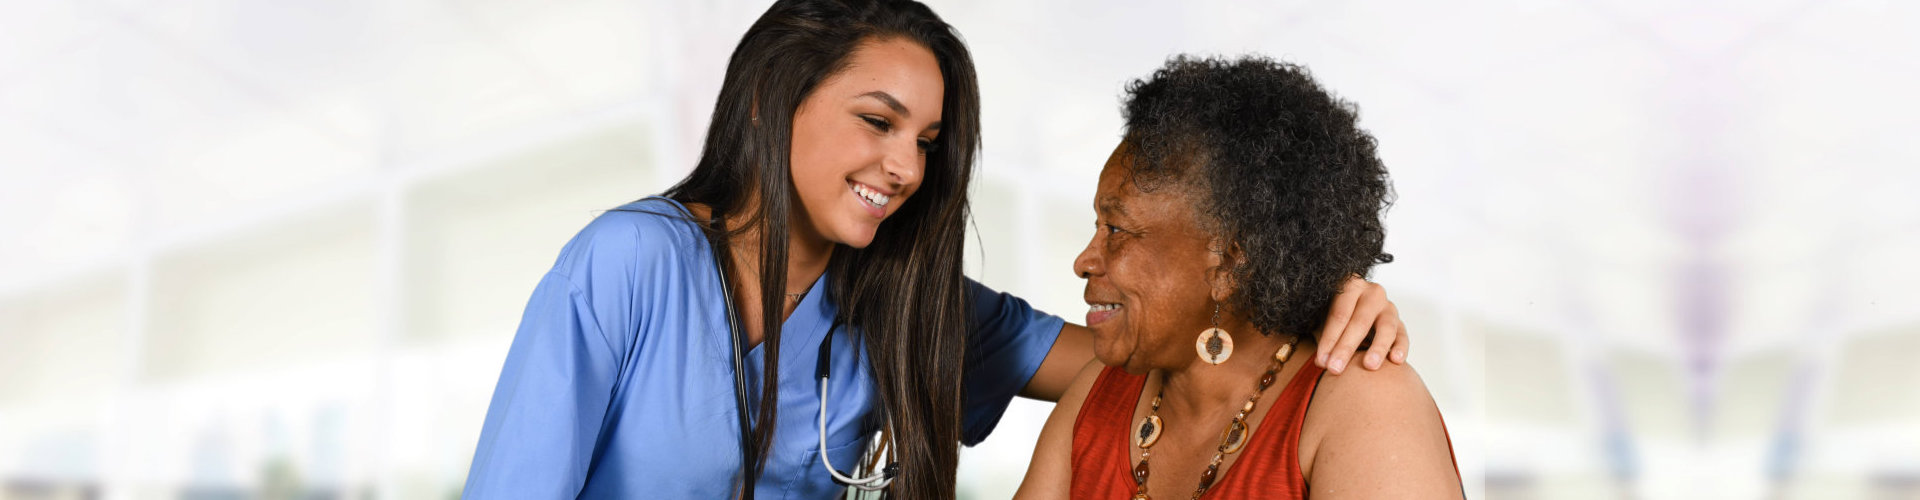 a female nurse smiling with a patient